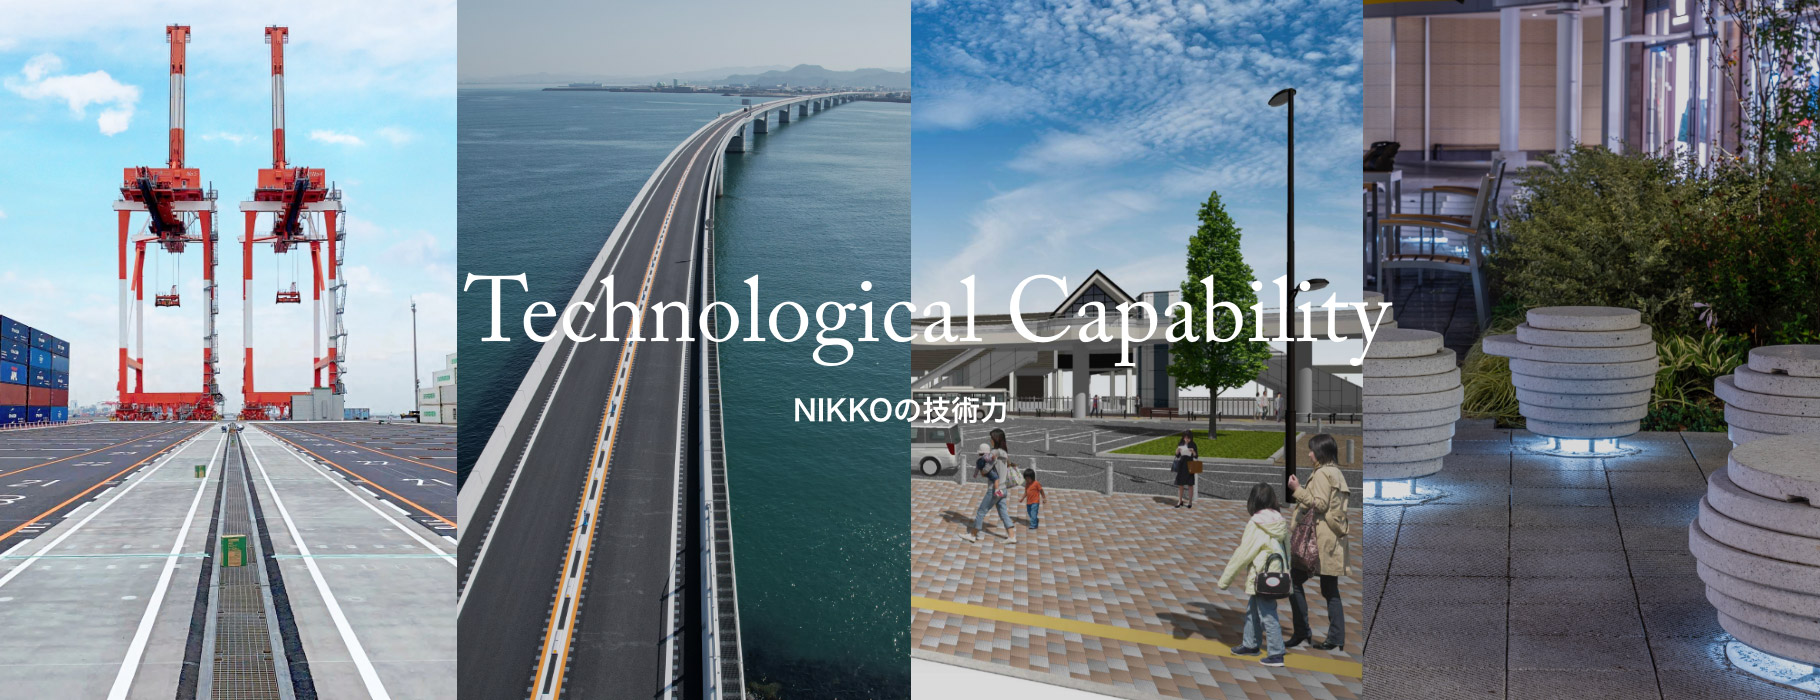 Technological Capabilities NIKKOの技術力